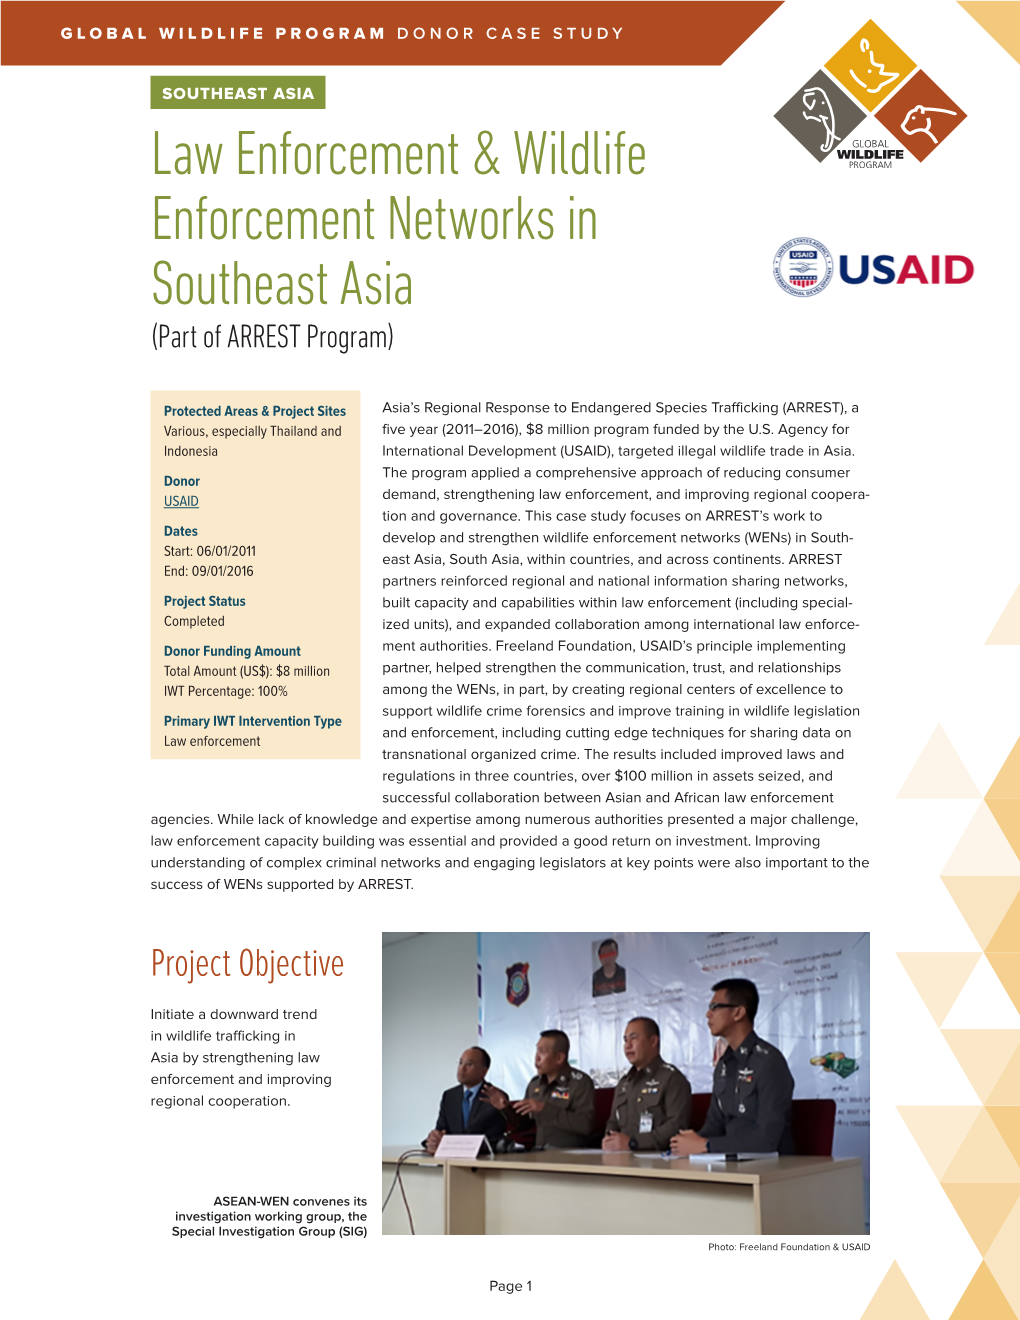 Law Enforcement & Wildlife Enforcement Networks in Southeast Asia